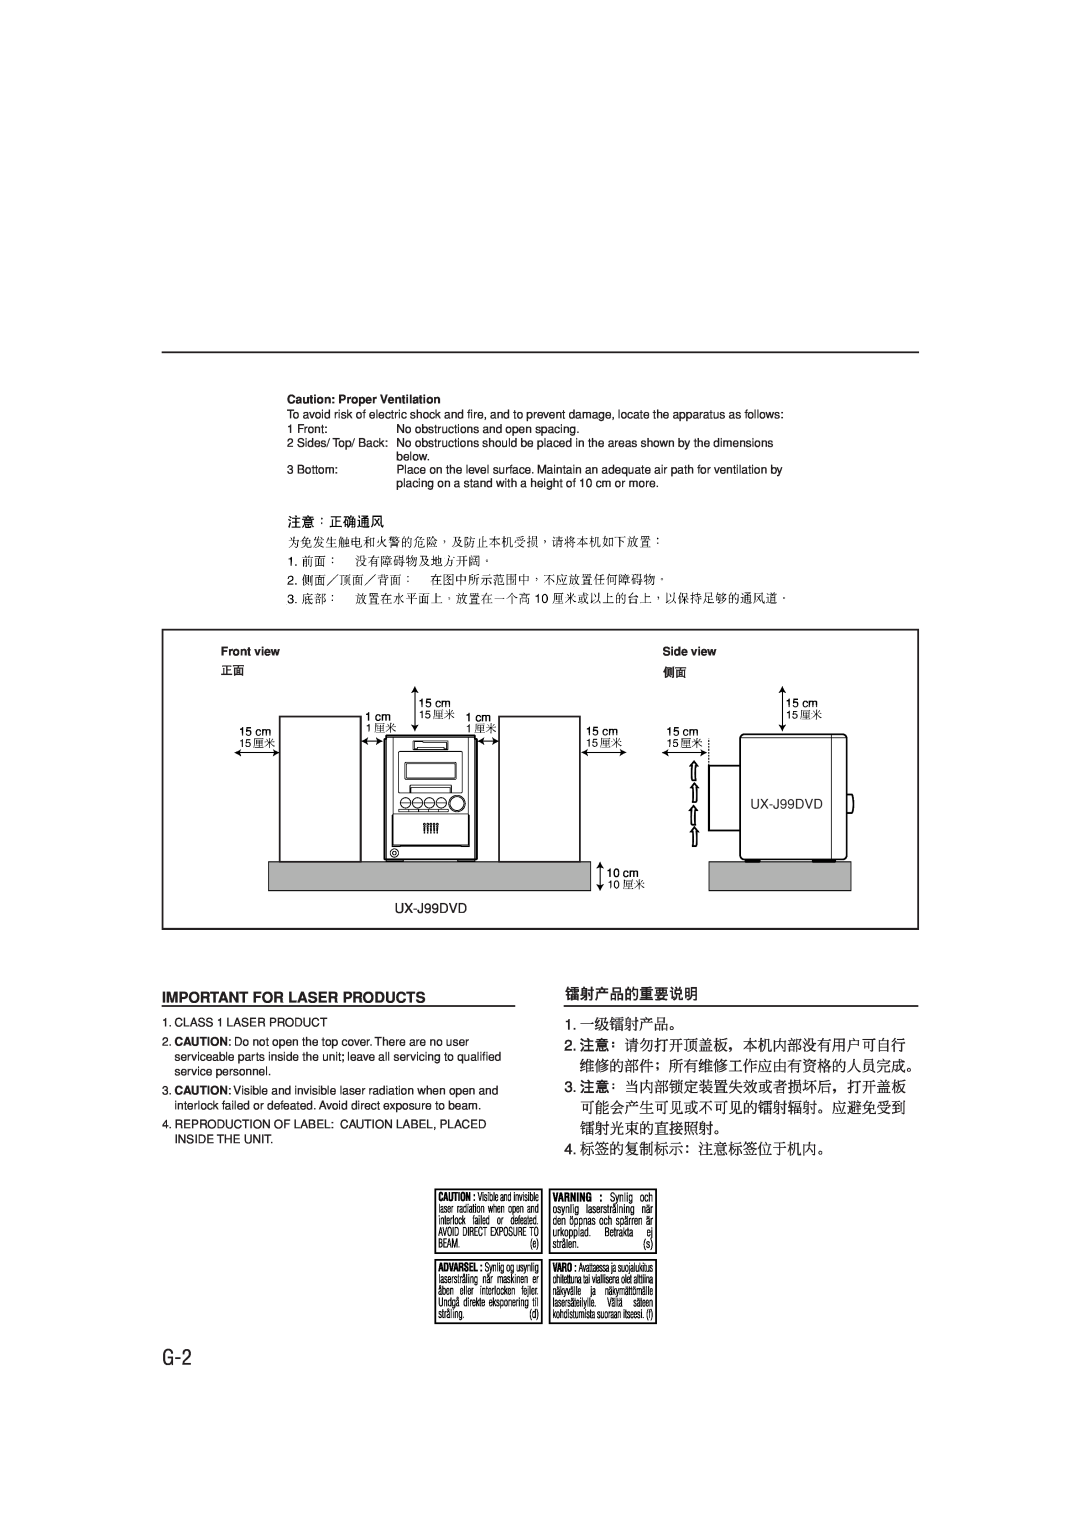 JVC UX-J99DVD manual Important For Laser Products, Caution: Proper Ventilation, Front view 